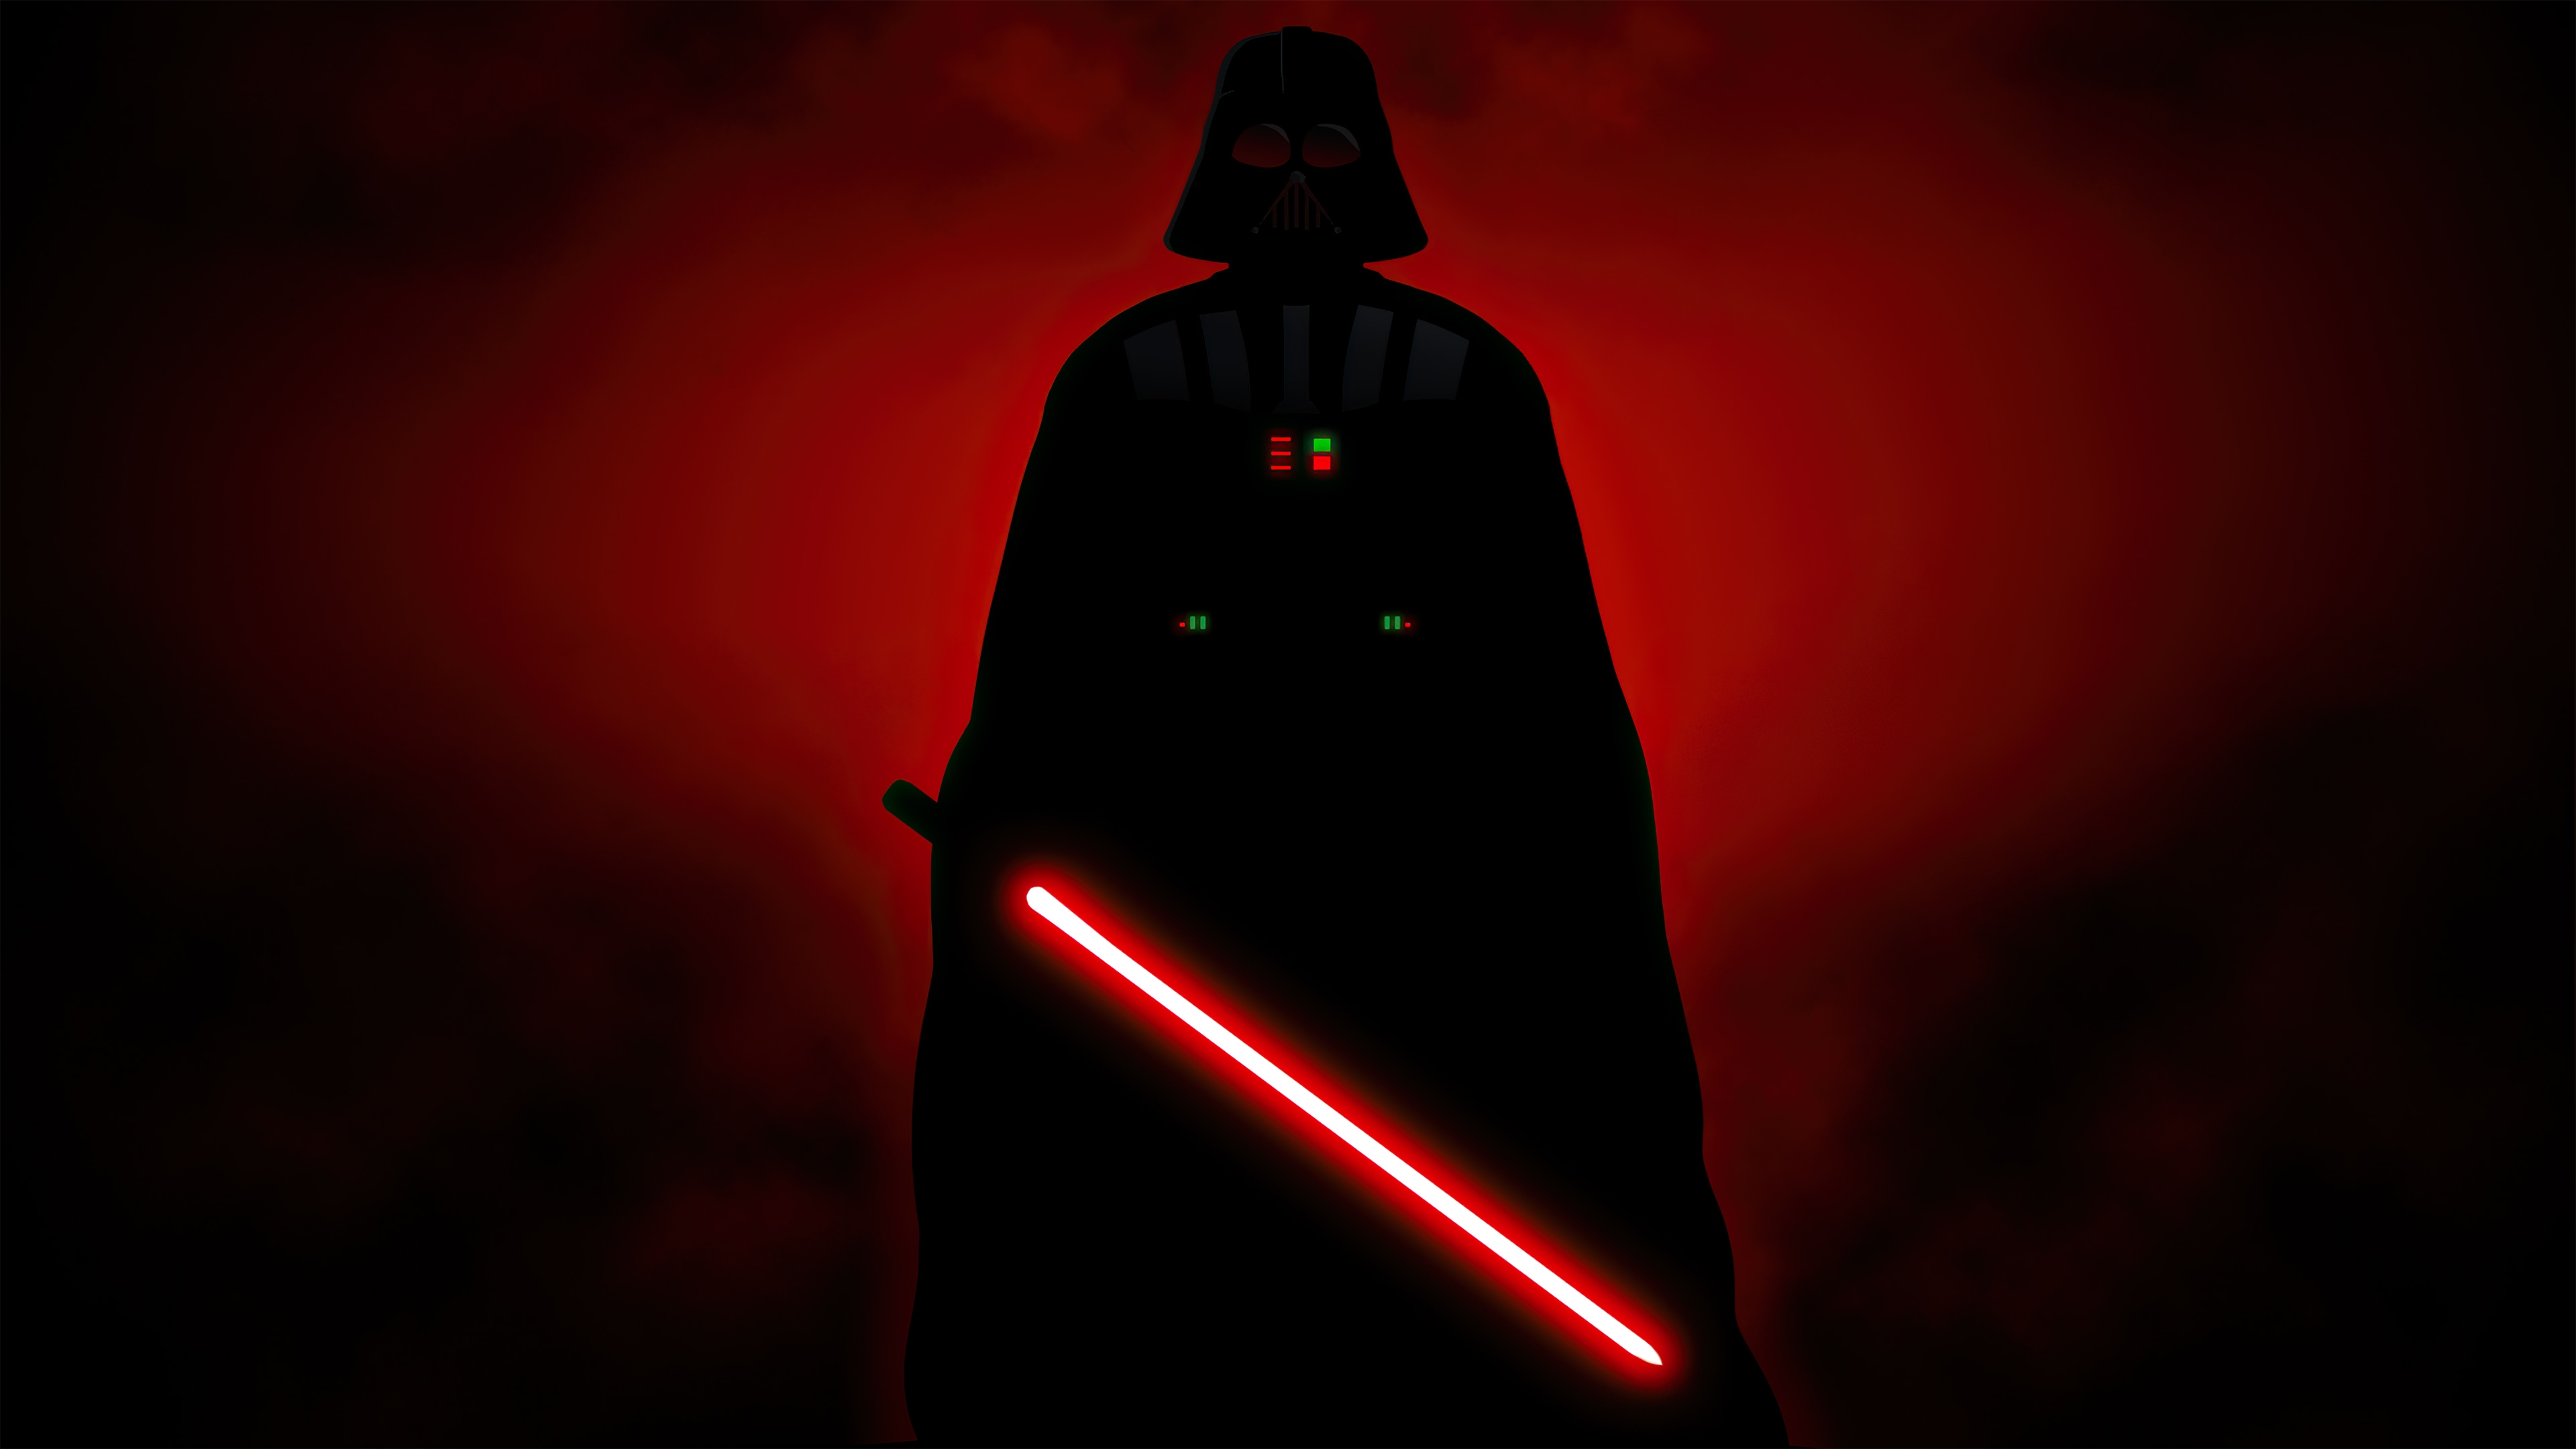 HD wallpaper, Darth Vader, Red Background, Dark Background, Smoke, Dark Aesthetic, Lightsaber, Star Wars, Silhouette